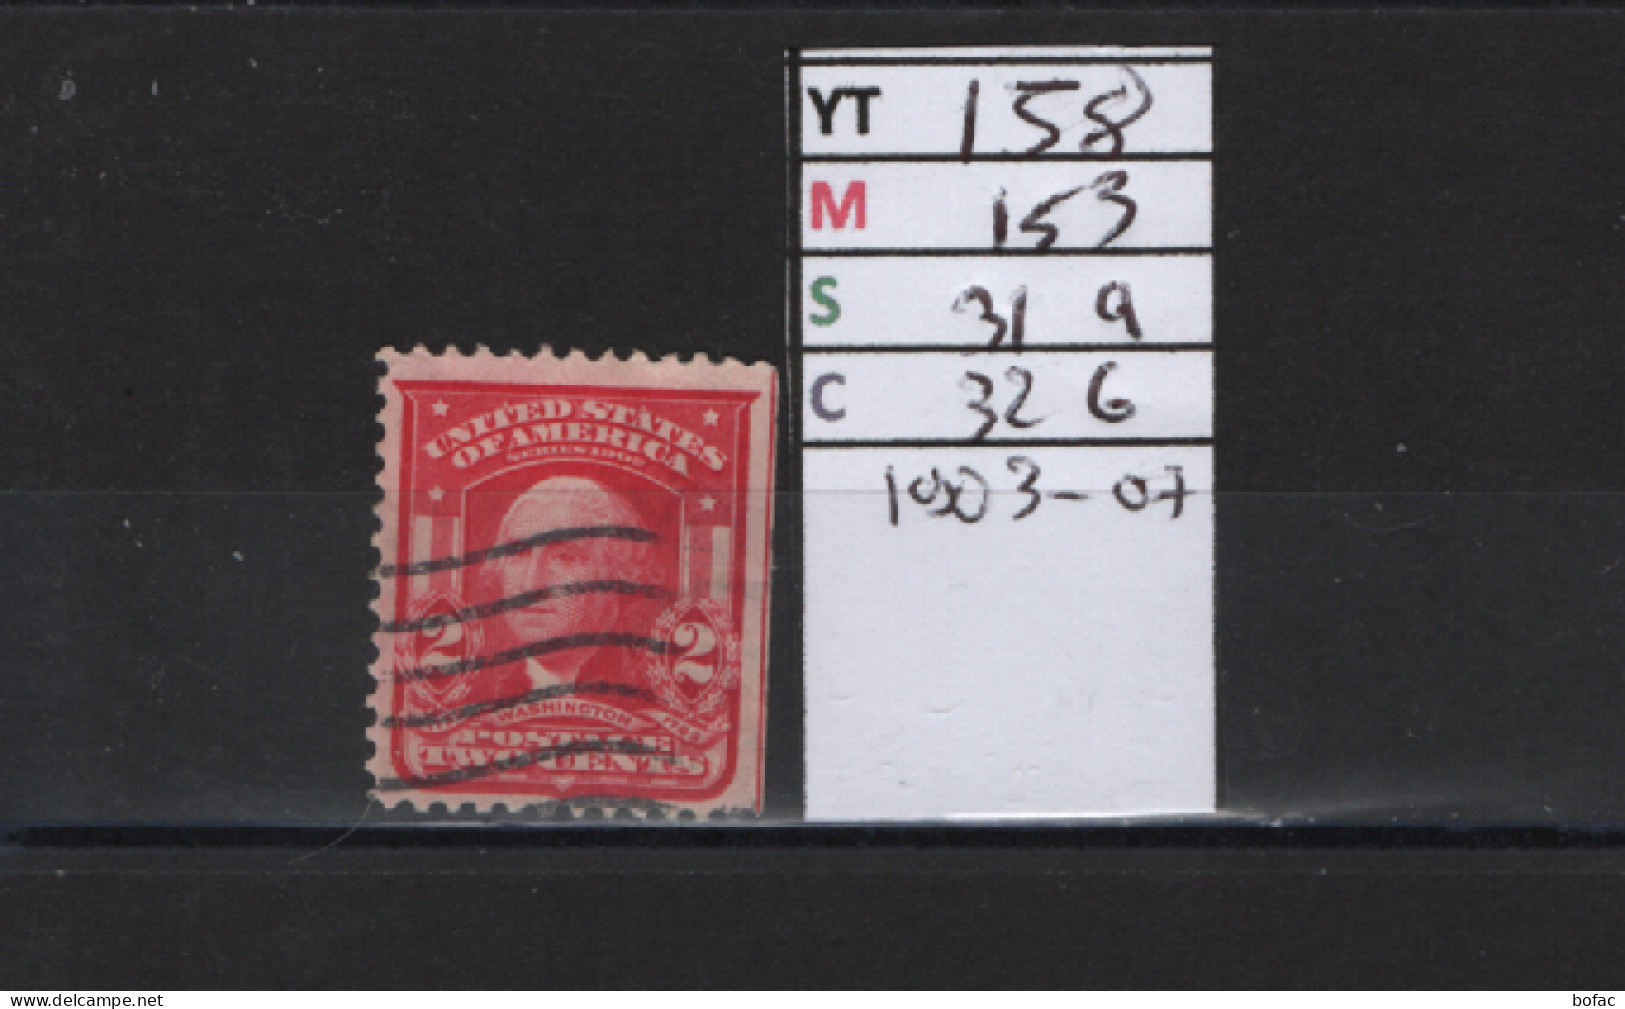 PRIX FIXE Obl  158 YT 153 MIC 319 SCO 326 GIB Washington  1903-07 Etats Unis 58/05  Dentelée 3 Cotés - Used Stamps